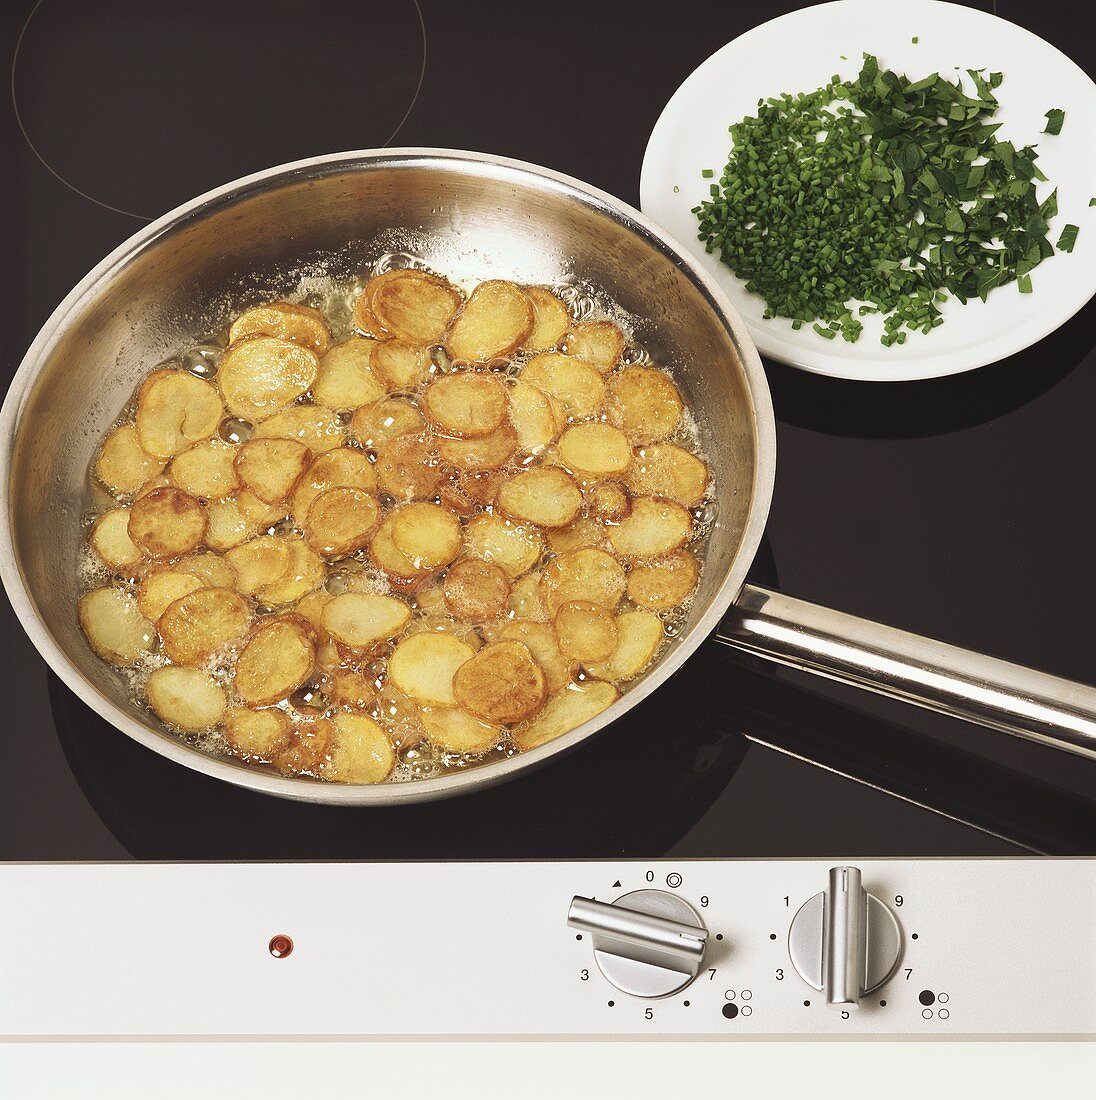 Deep-frying potatoes